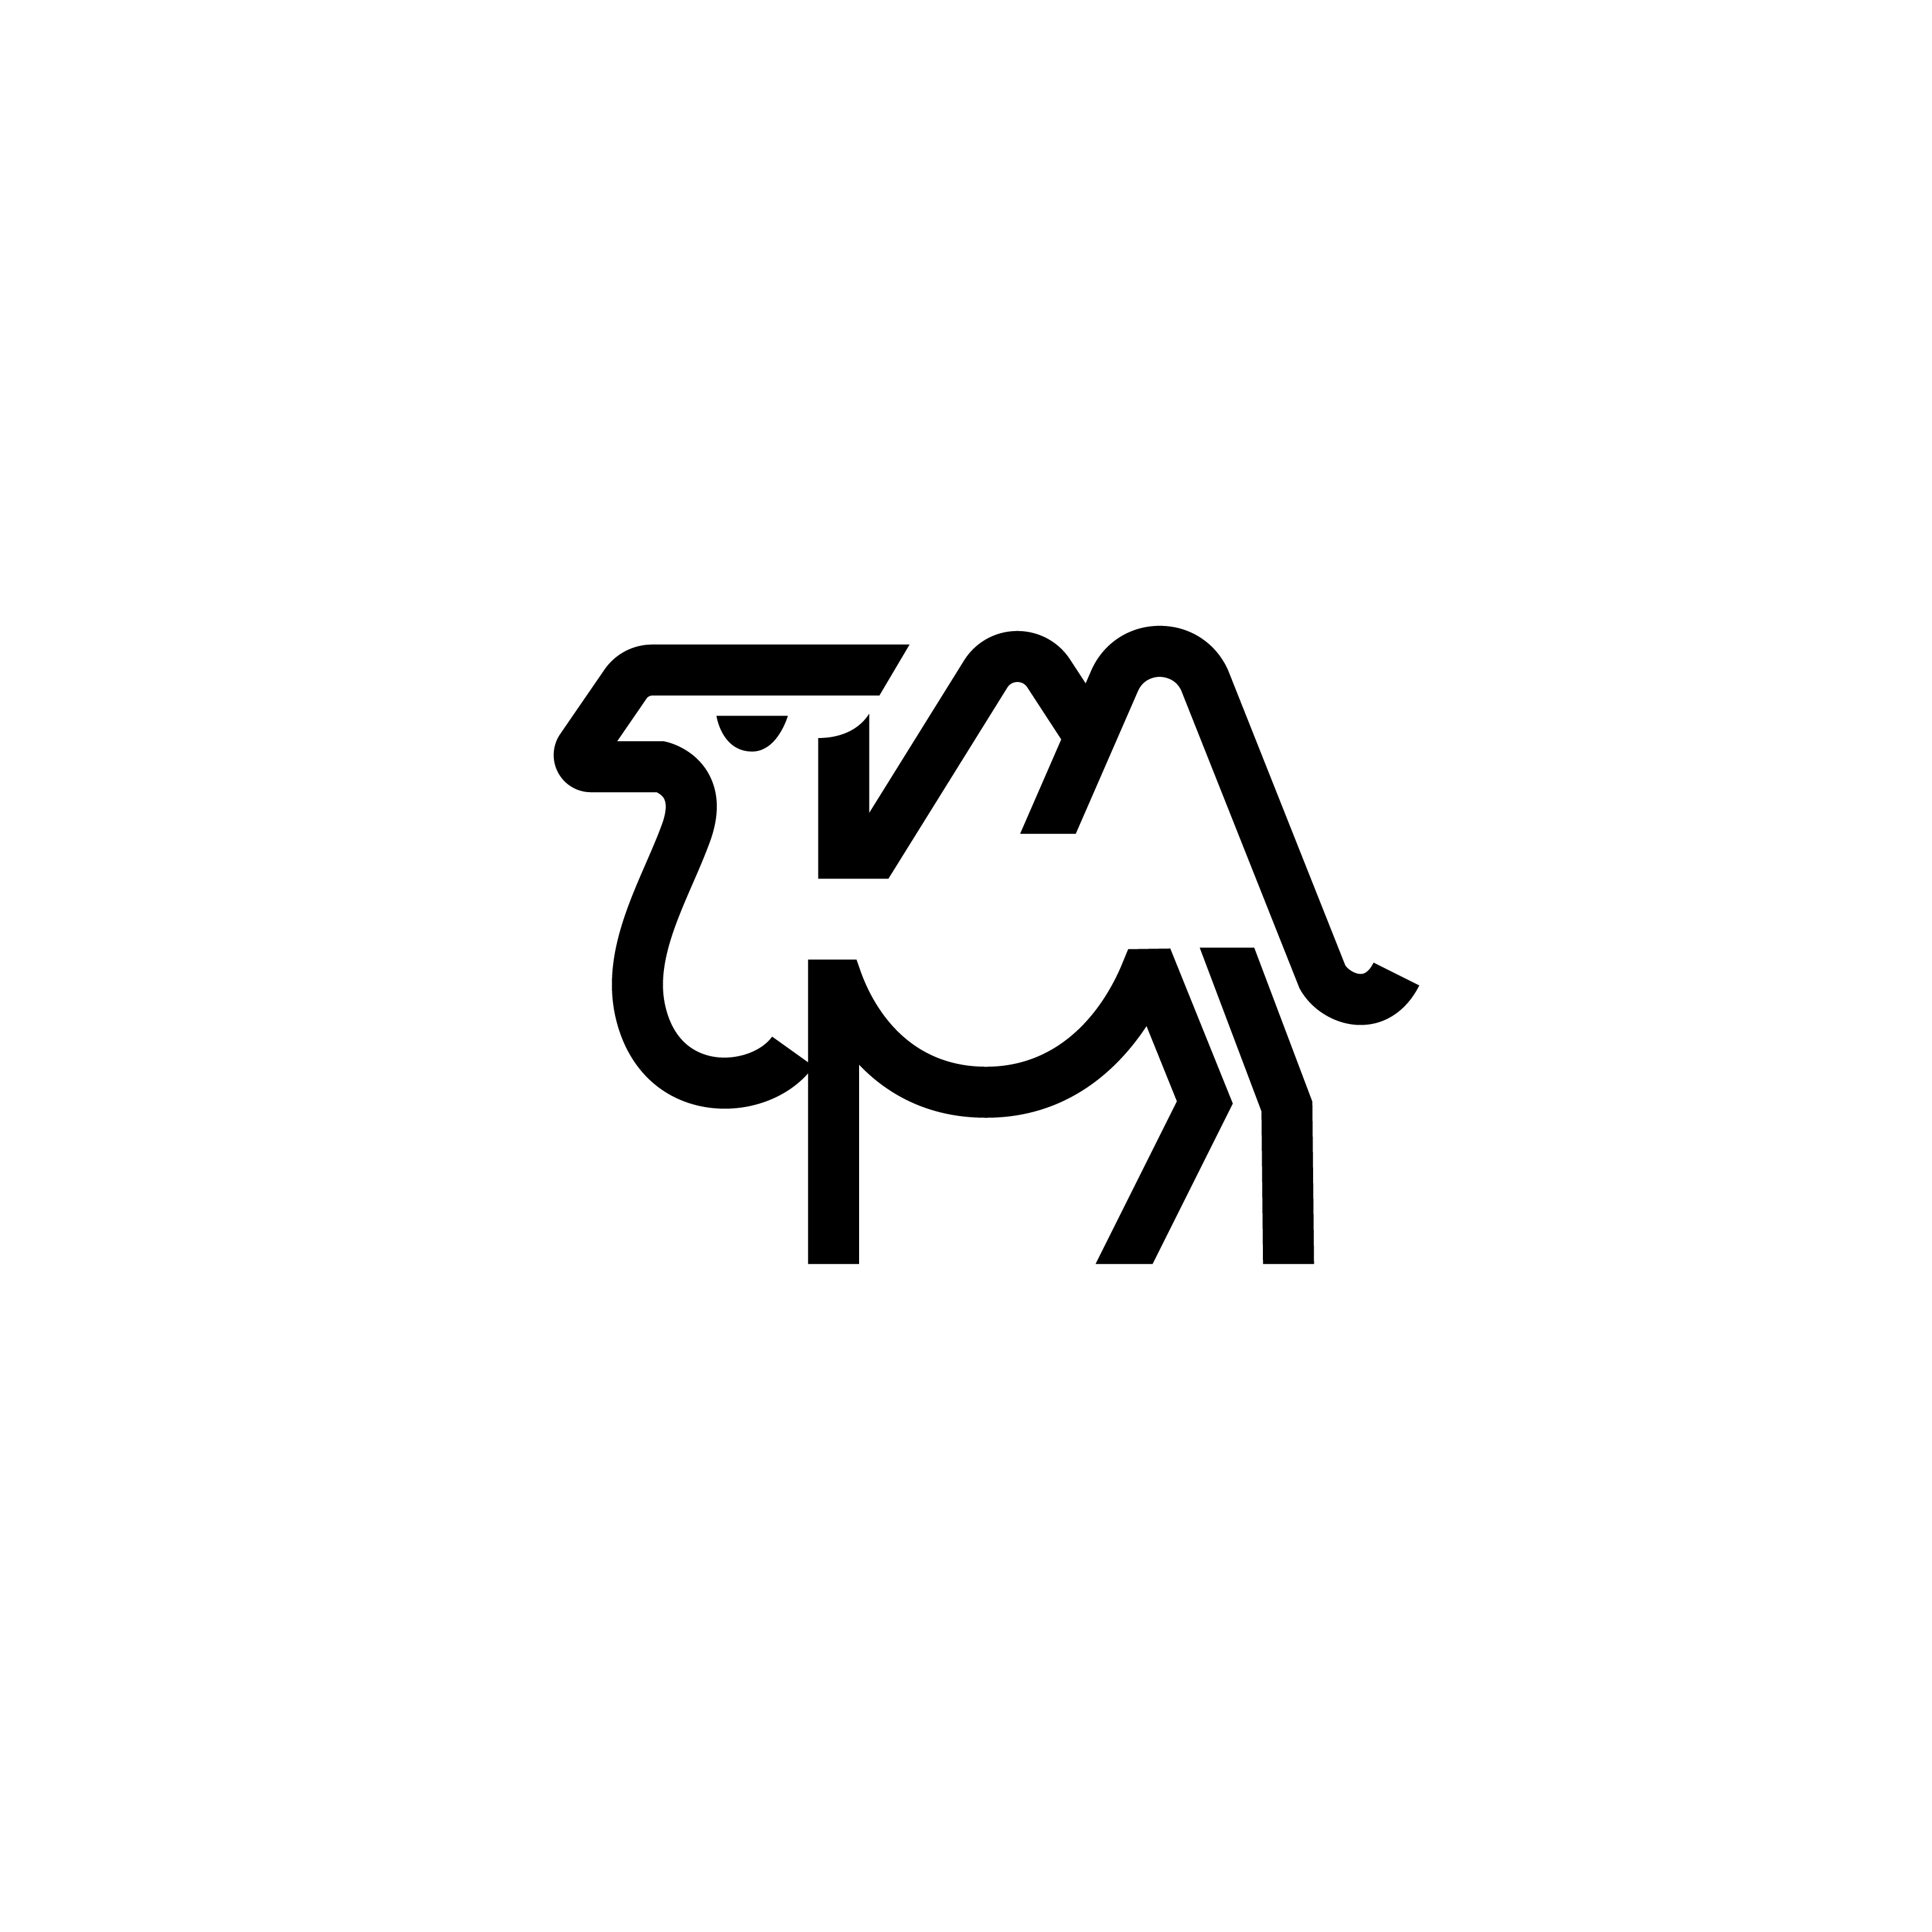 Camel logo design by logo designer meem design for your inspiration and for the worlds largest logo competition